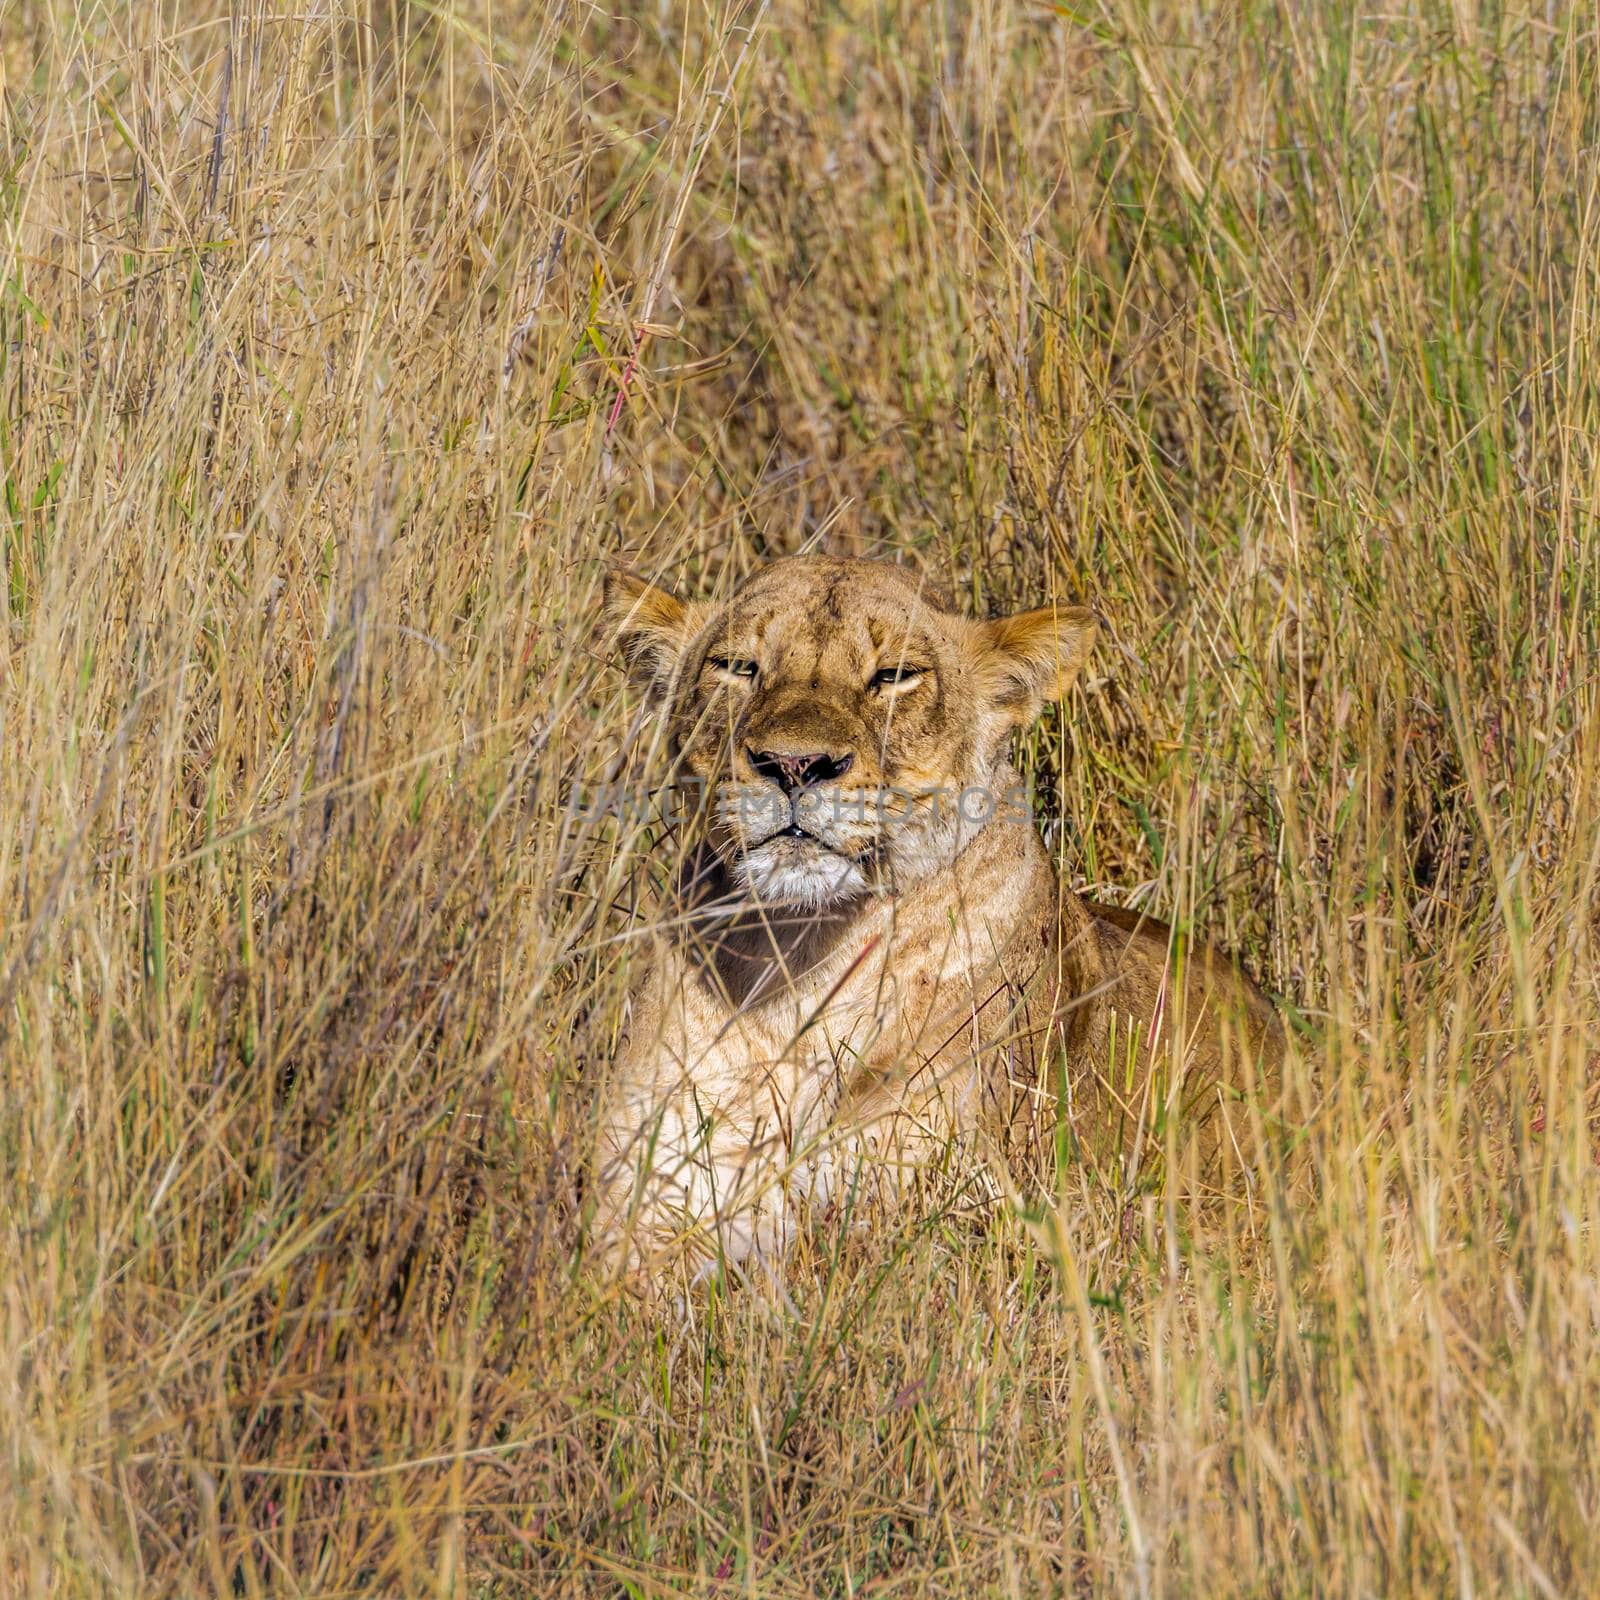 Specie Panthera leo family of Felidae